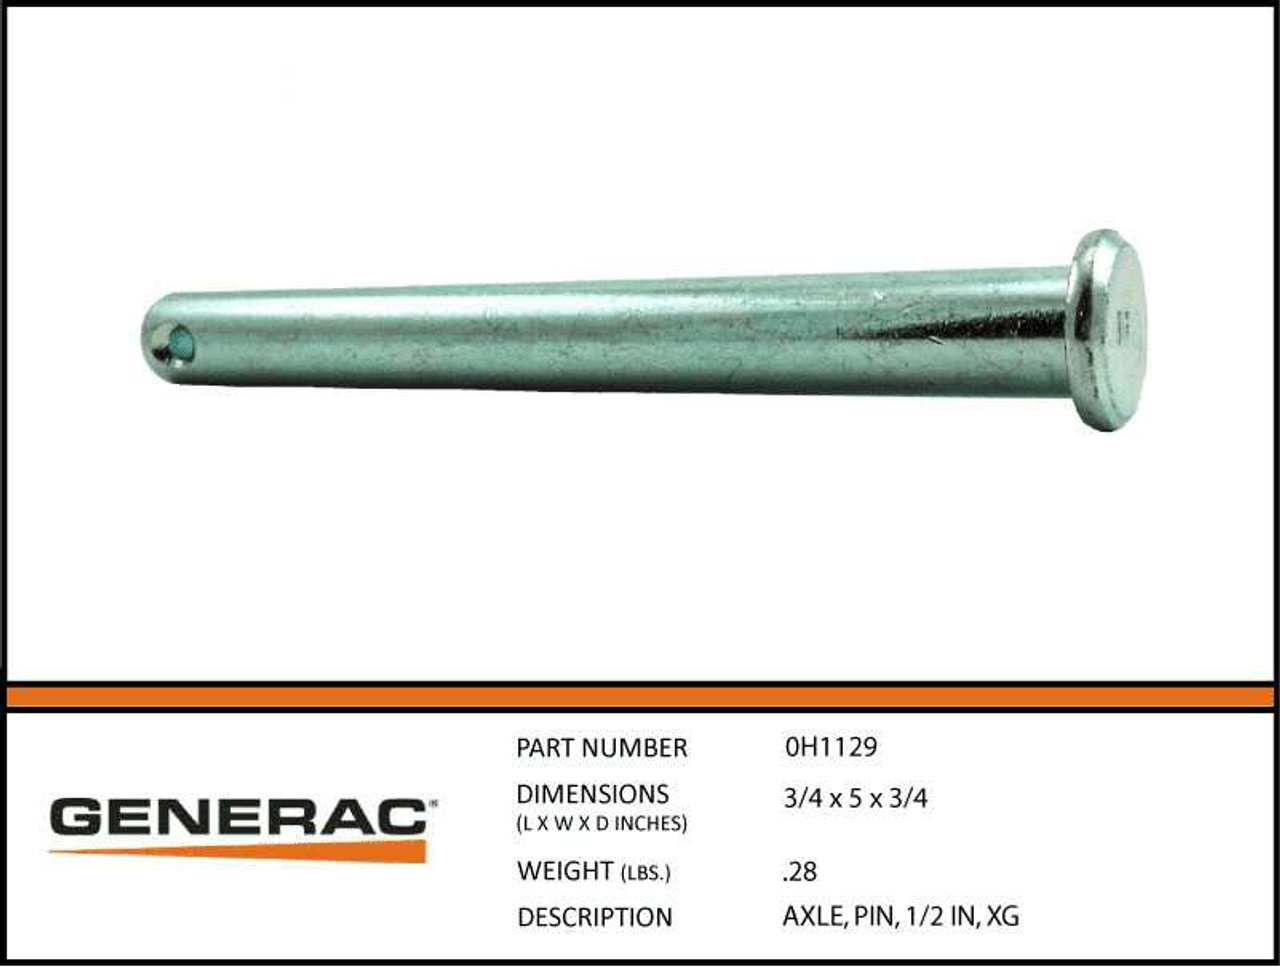 Generac 0H1129 Pin Axle